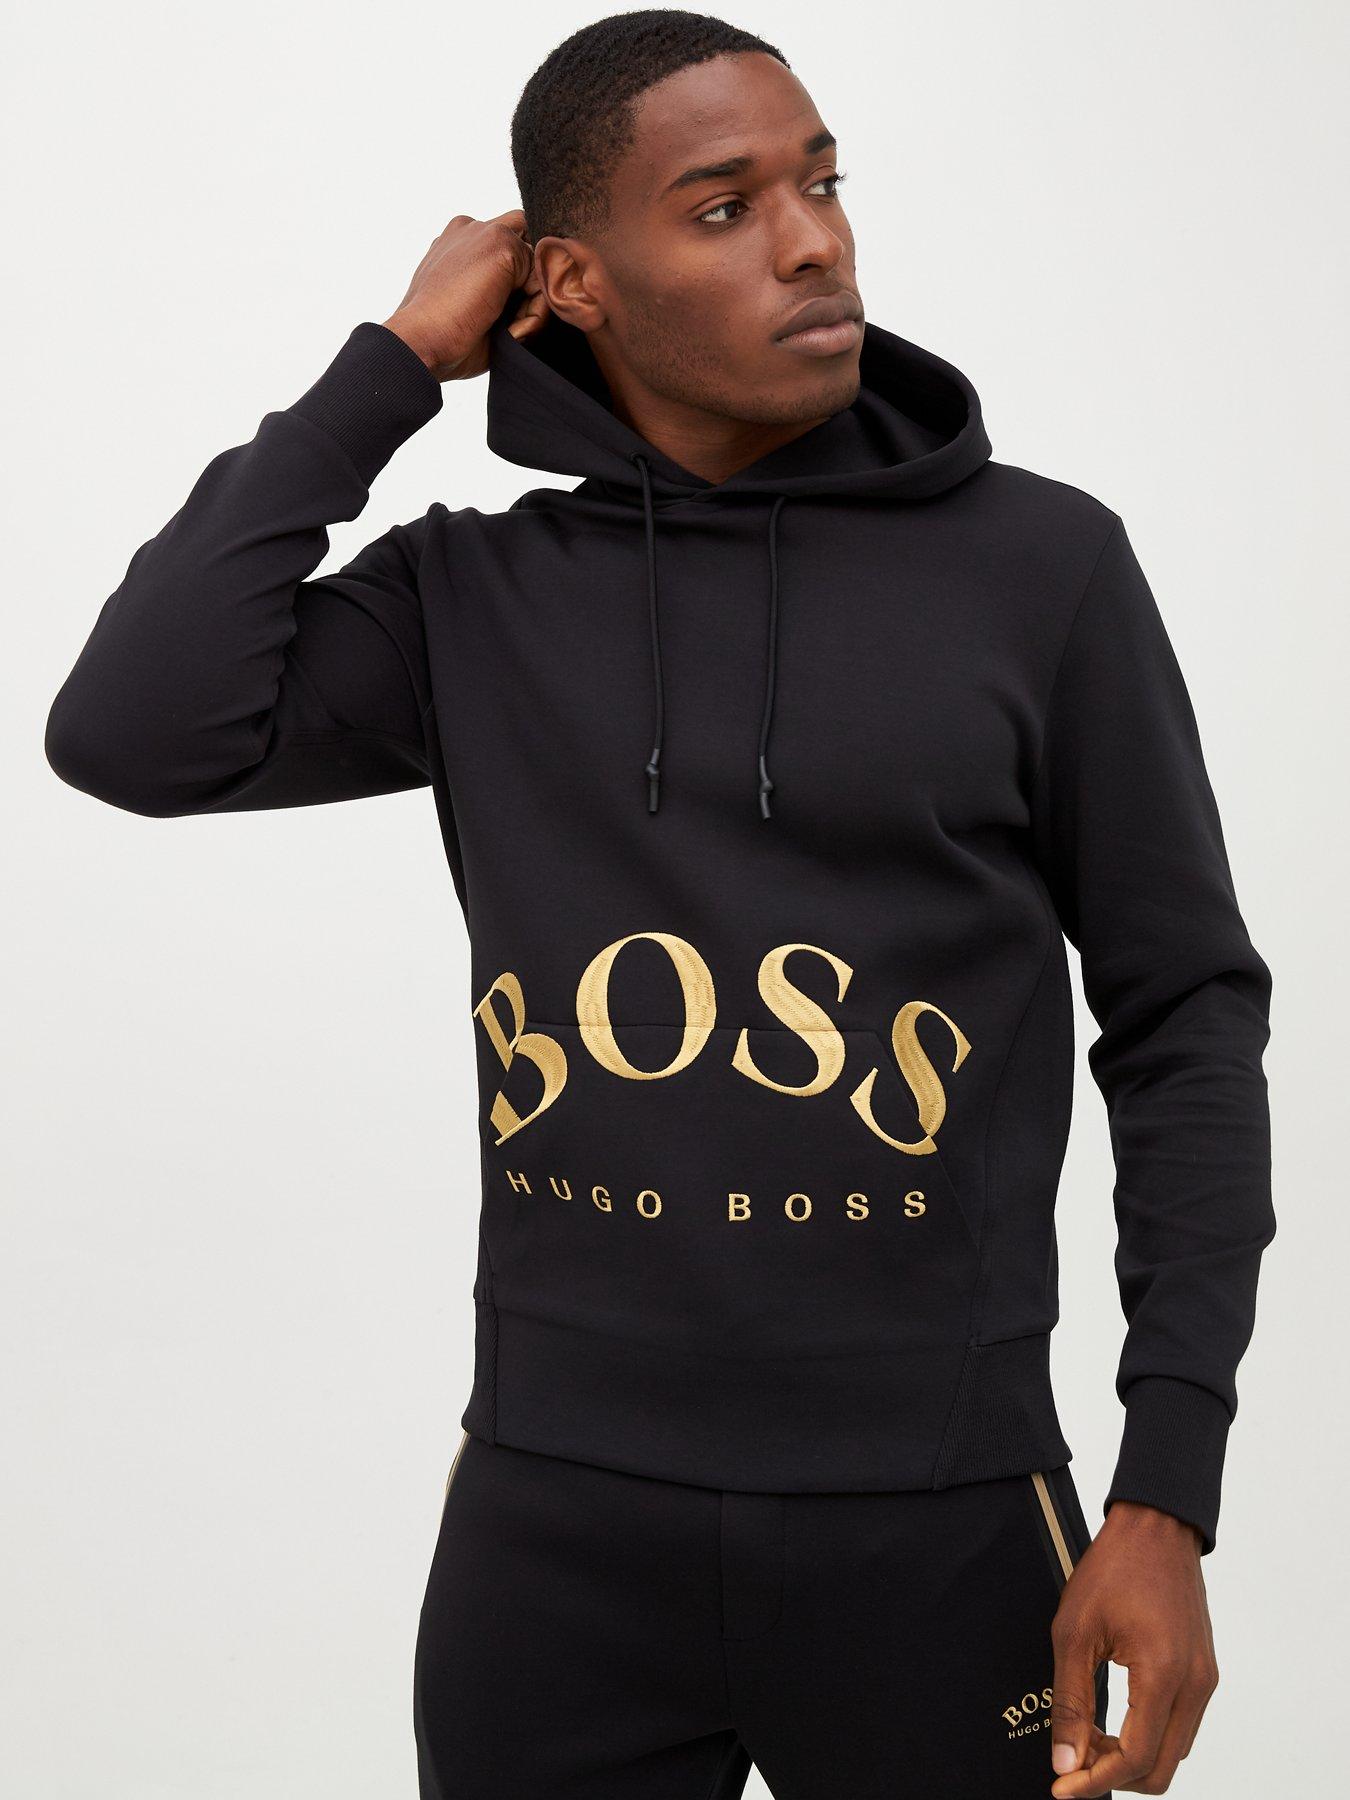 hugo boss sweatshirt black gold 